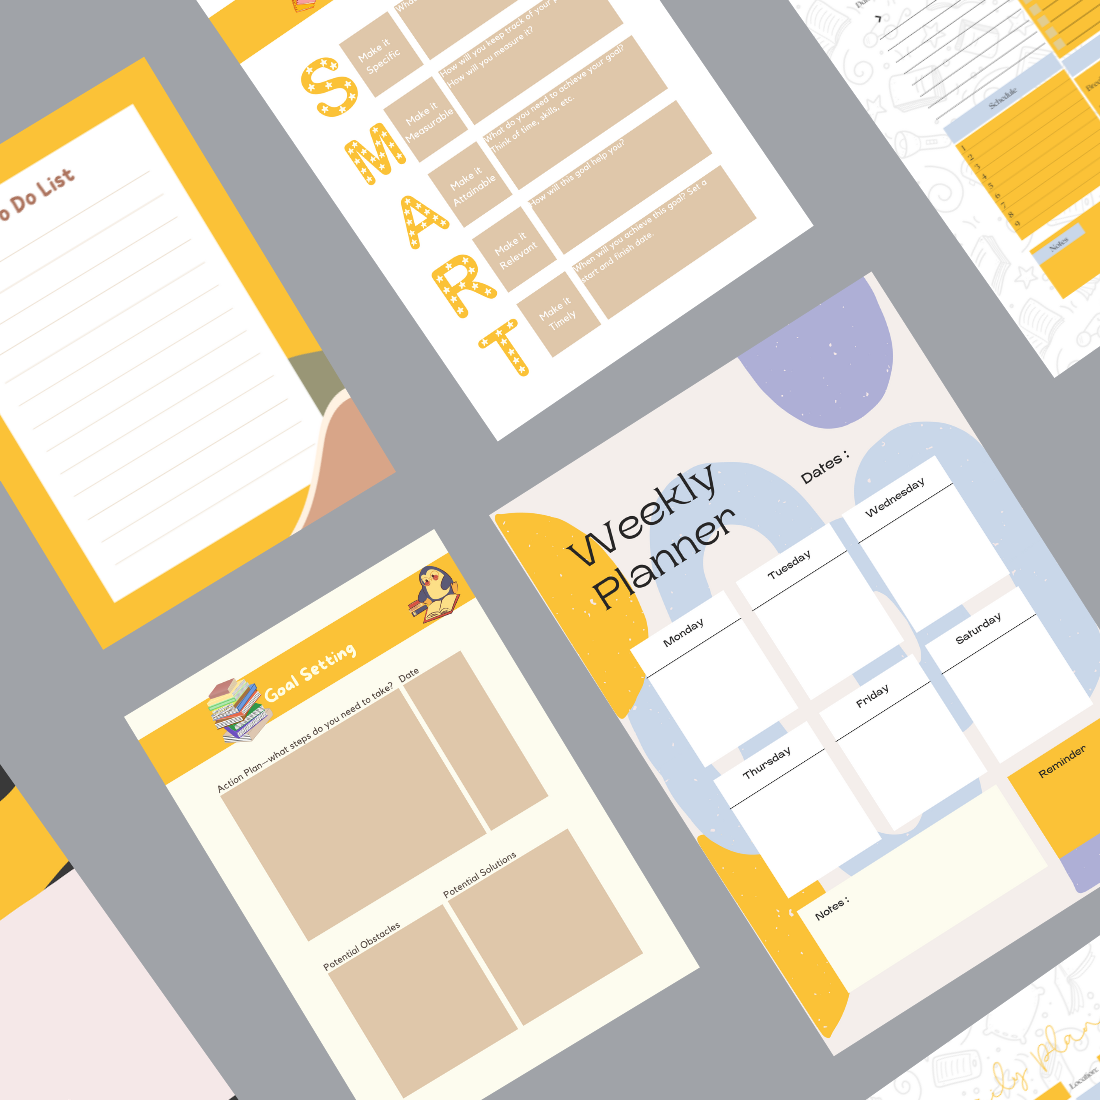 Elegant Printable Planner Design preview image.